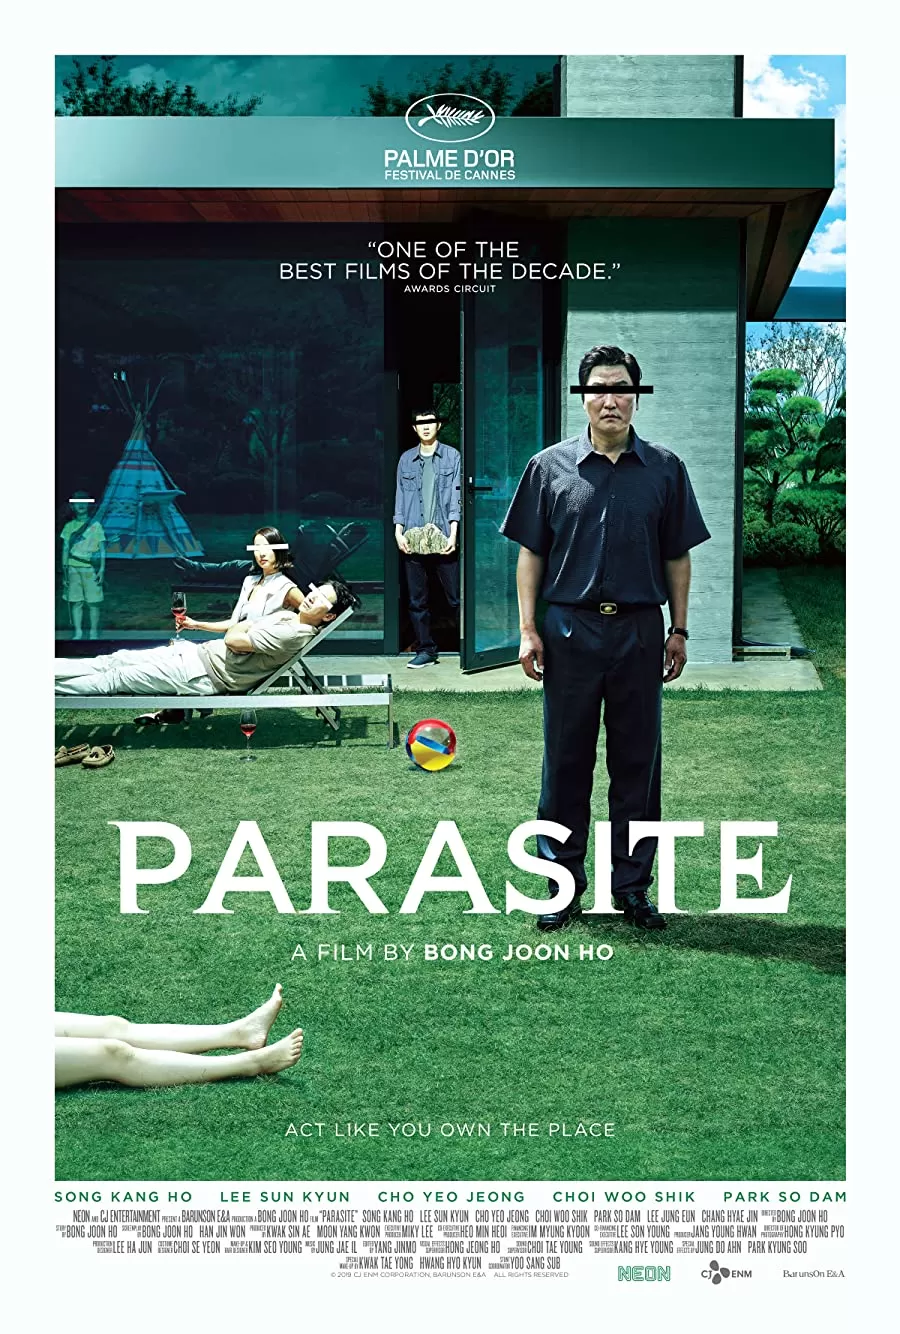 فیلم Parasite 2019